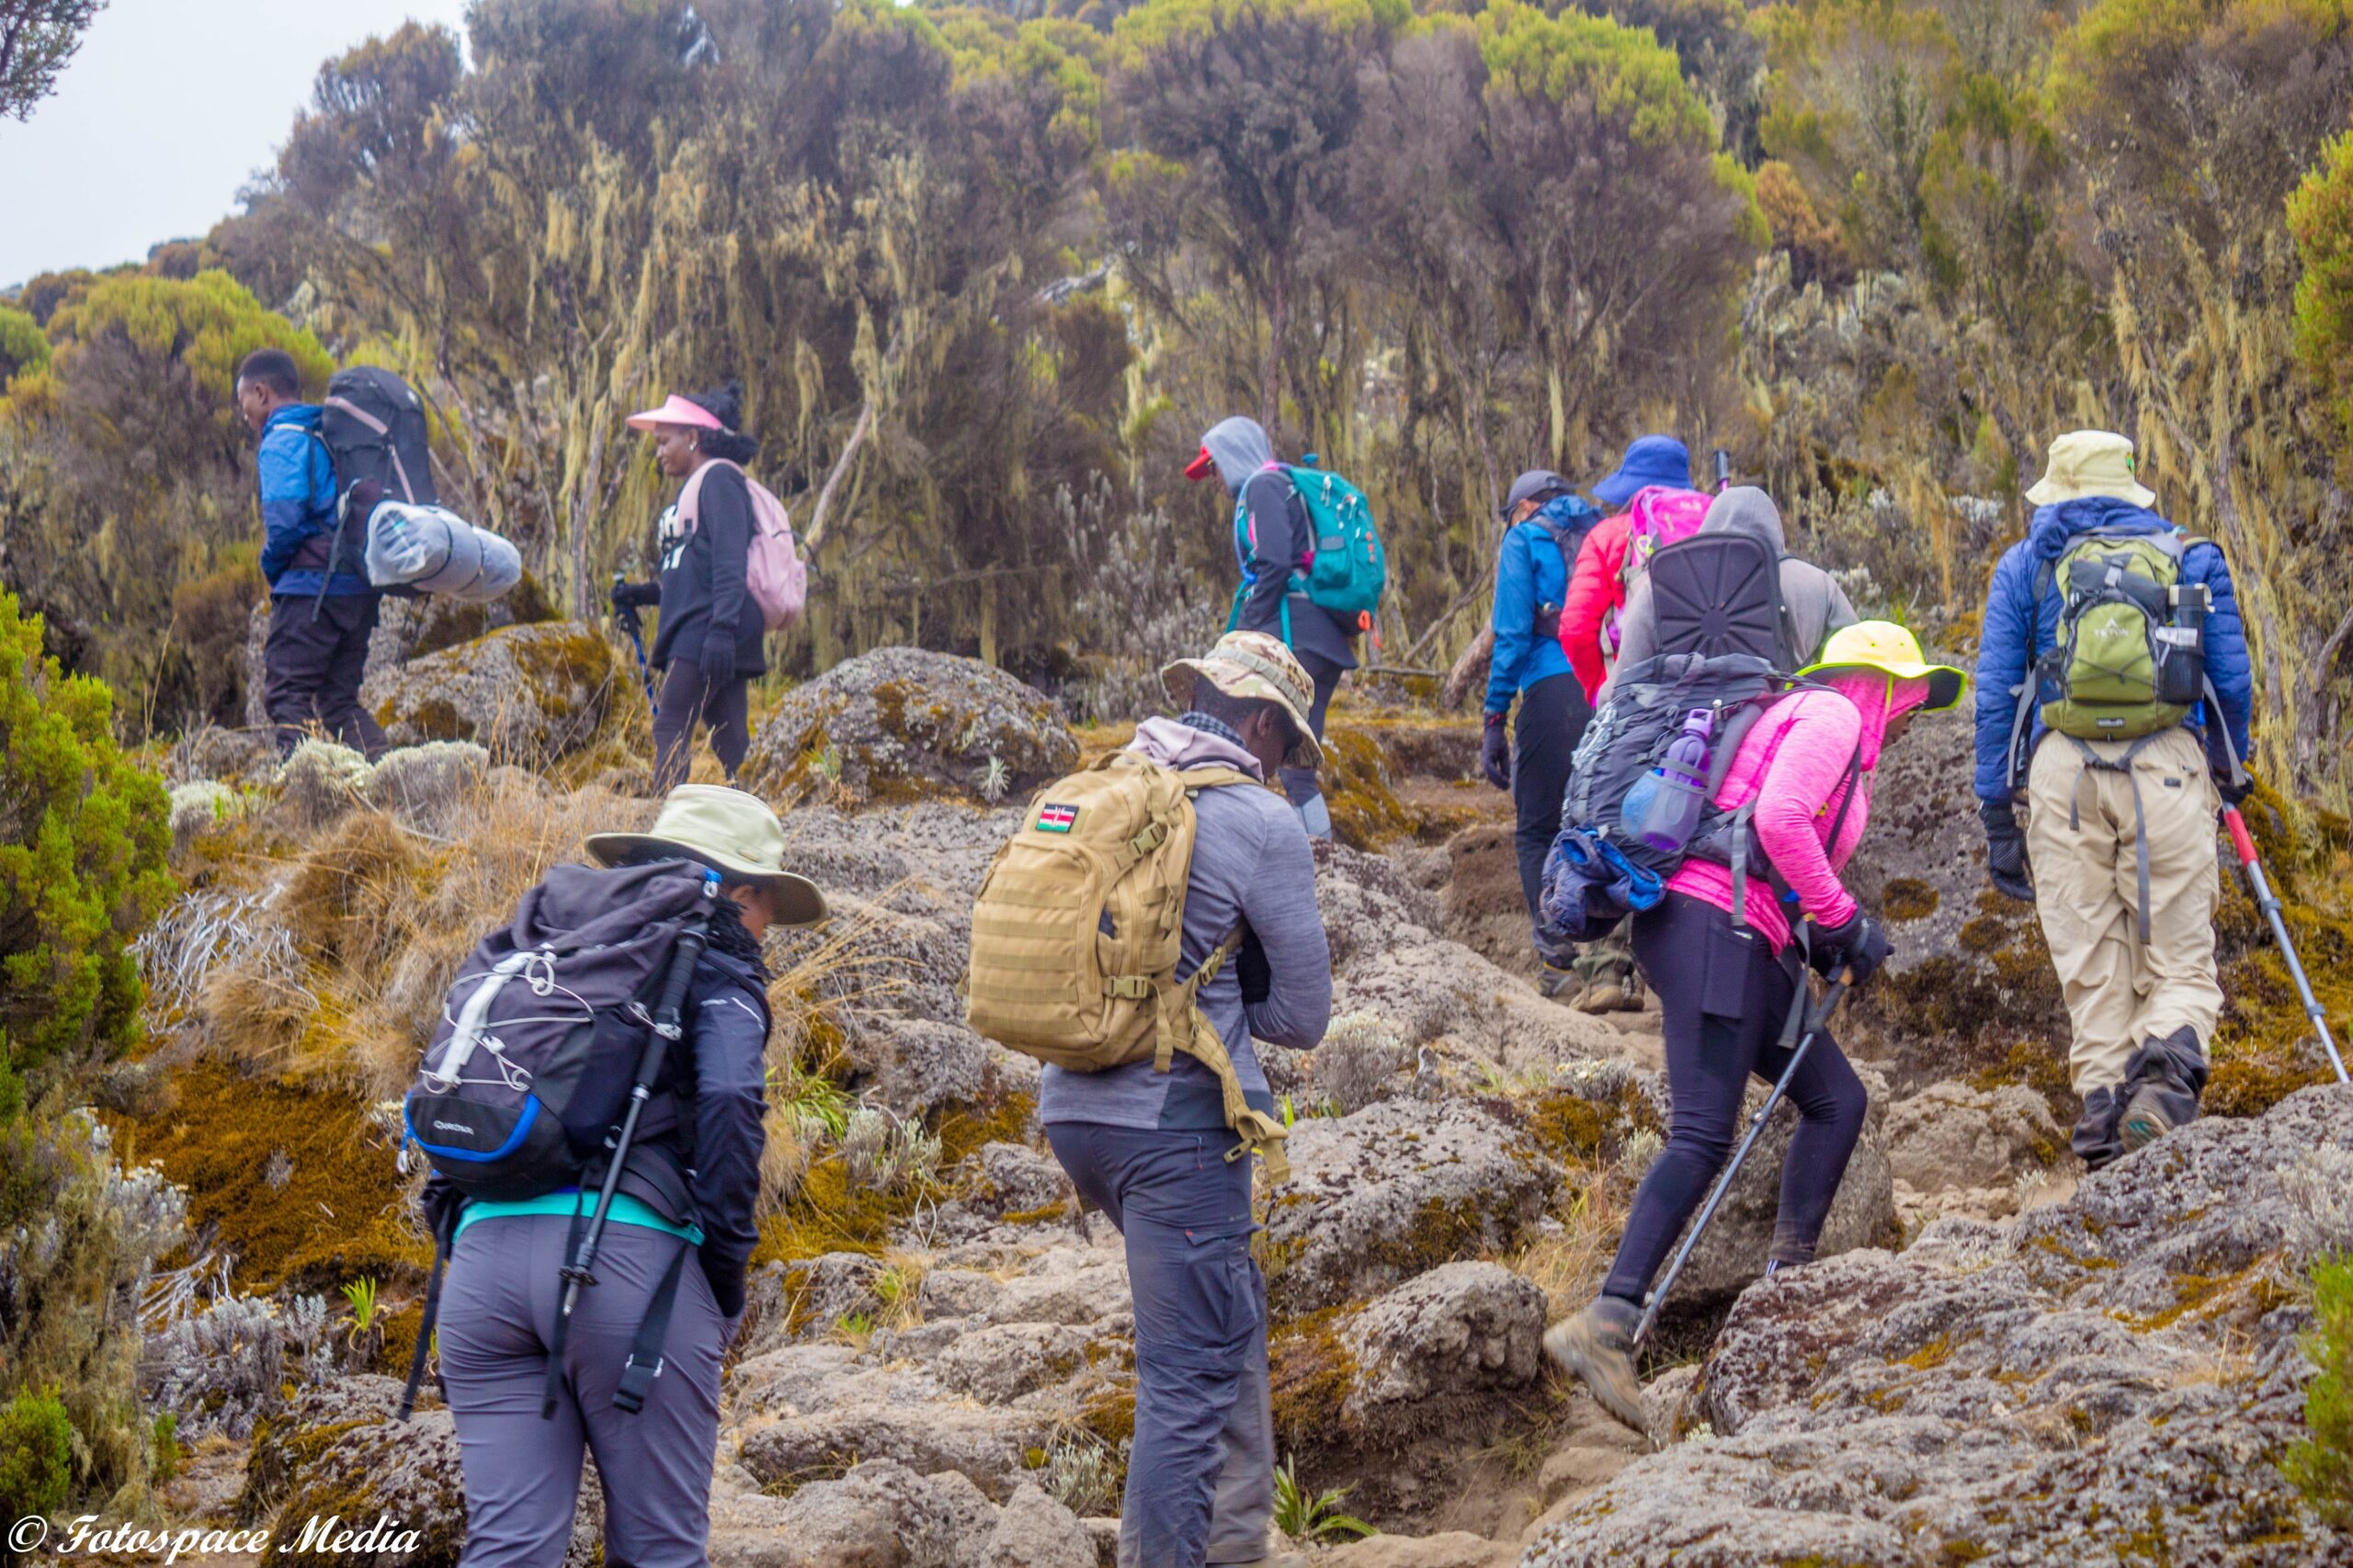 Mount Kilimanjaro Day Hike – Marangu Route